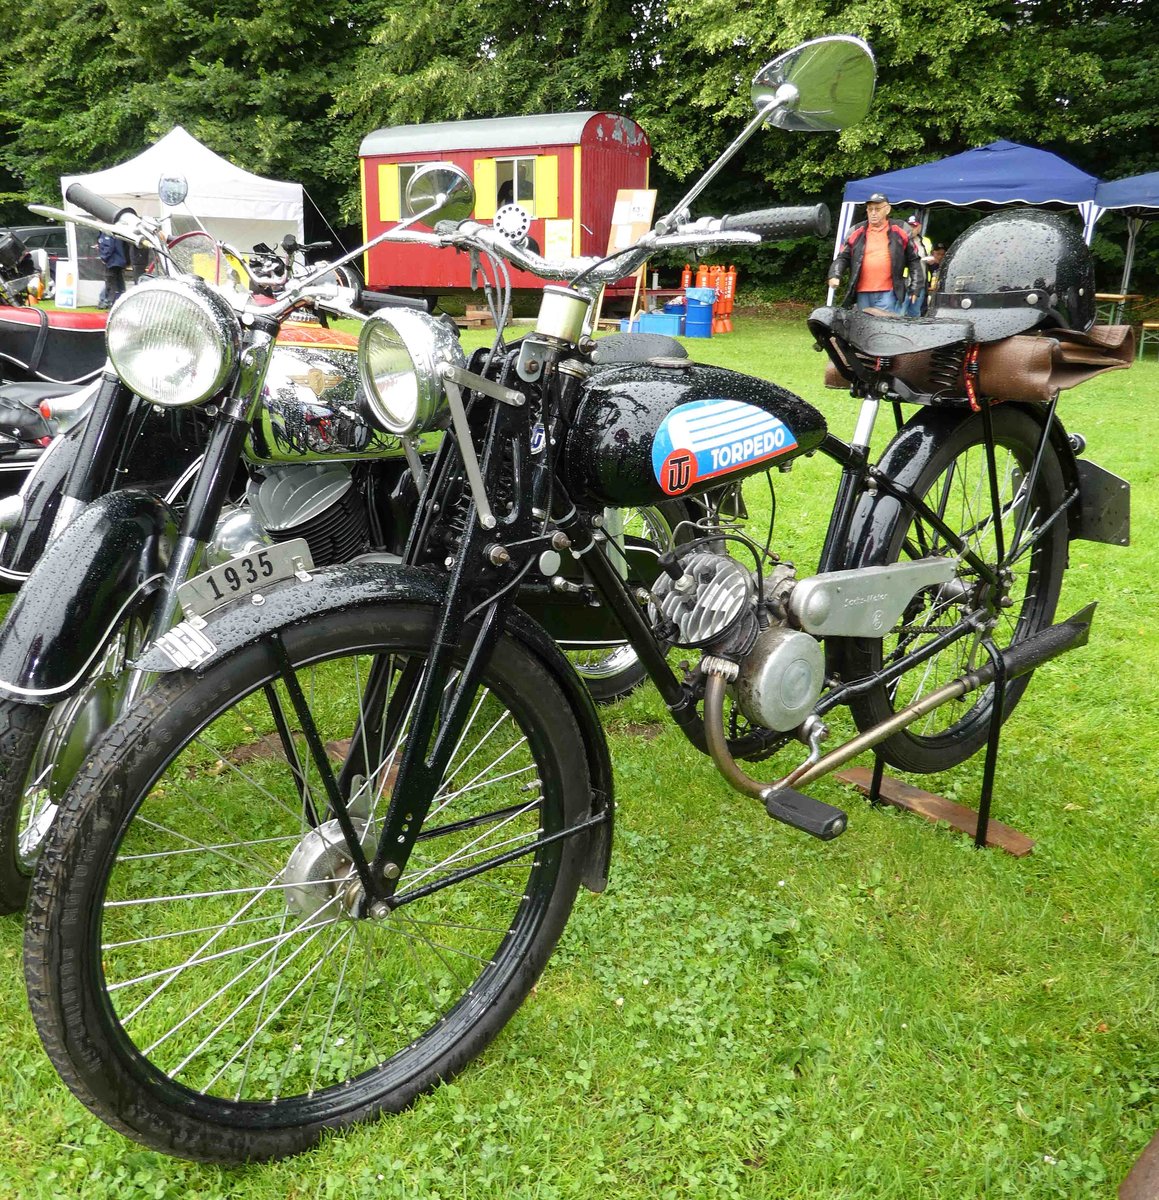 =Torpedo-Moped, Bj. 1935, gesehen in Gudensberg im Juli 2016